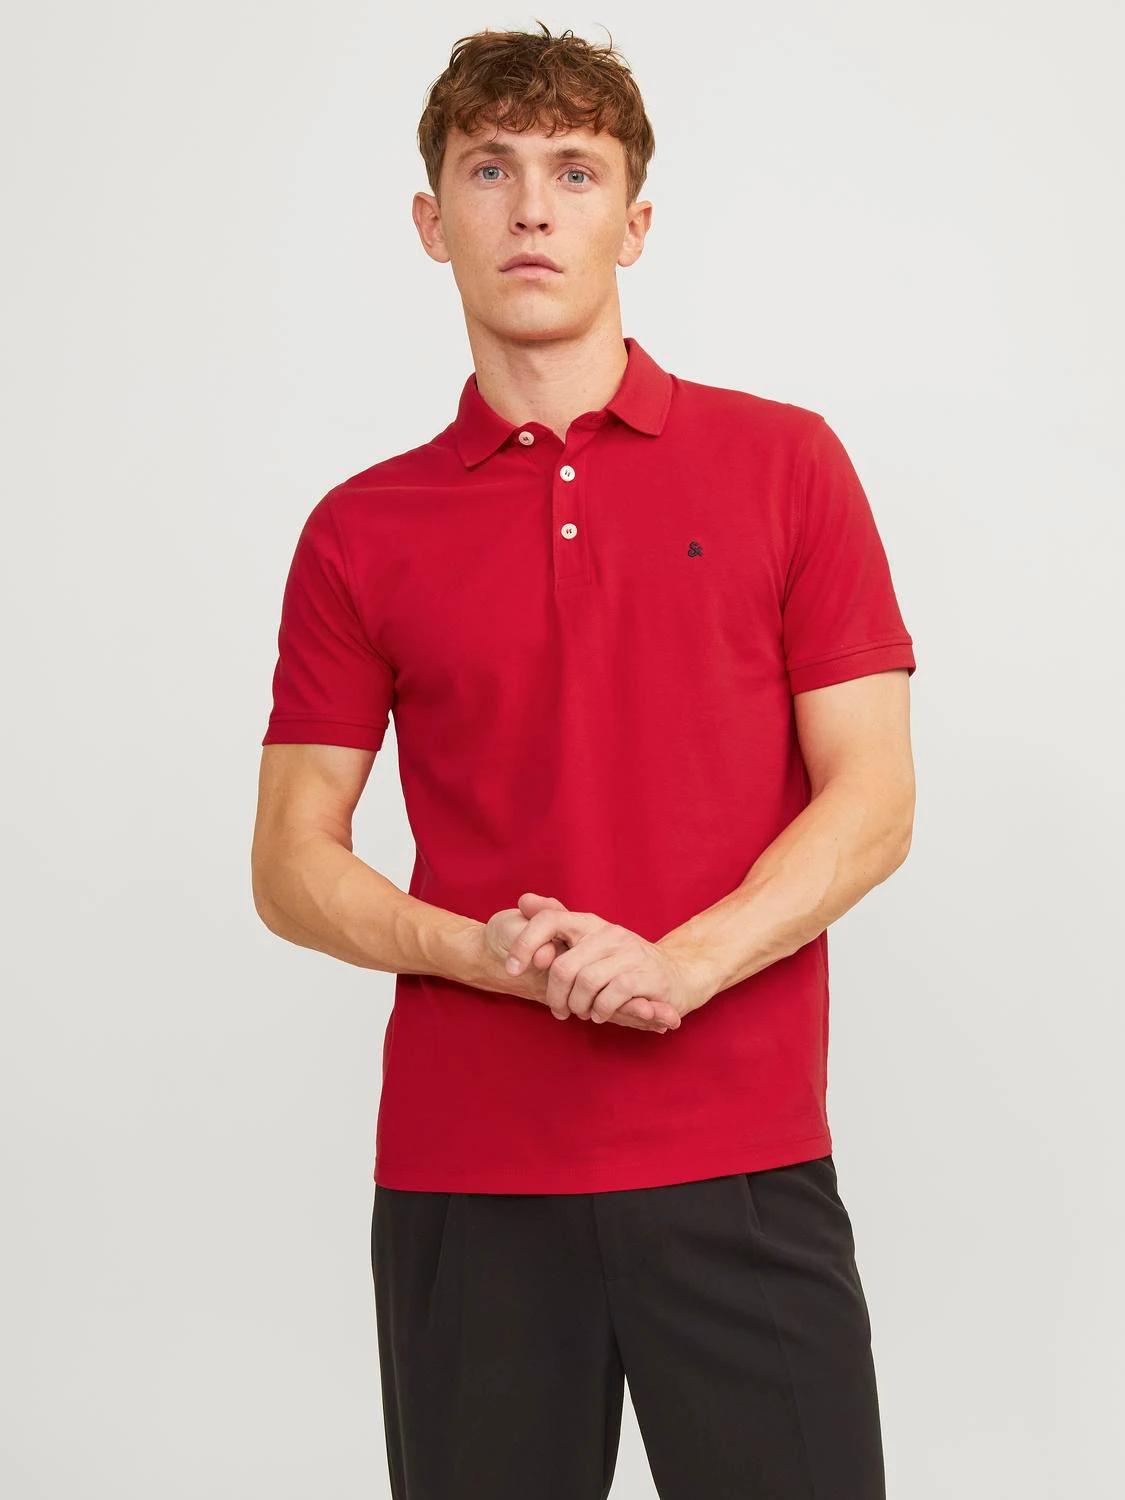 jackjones-plainpolot-shirt-red